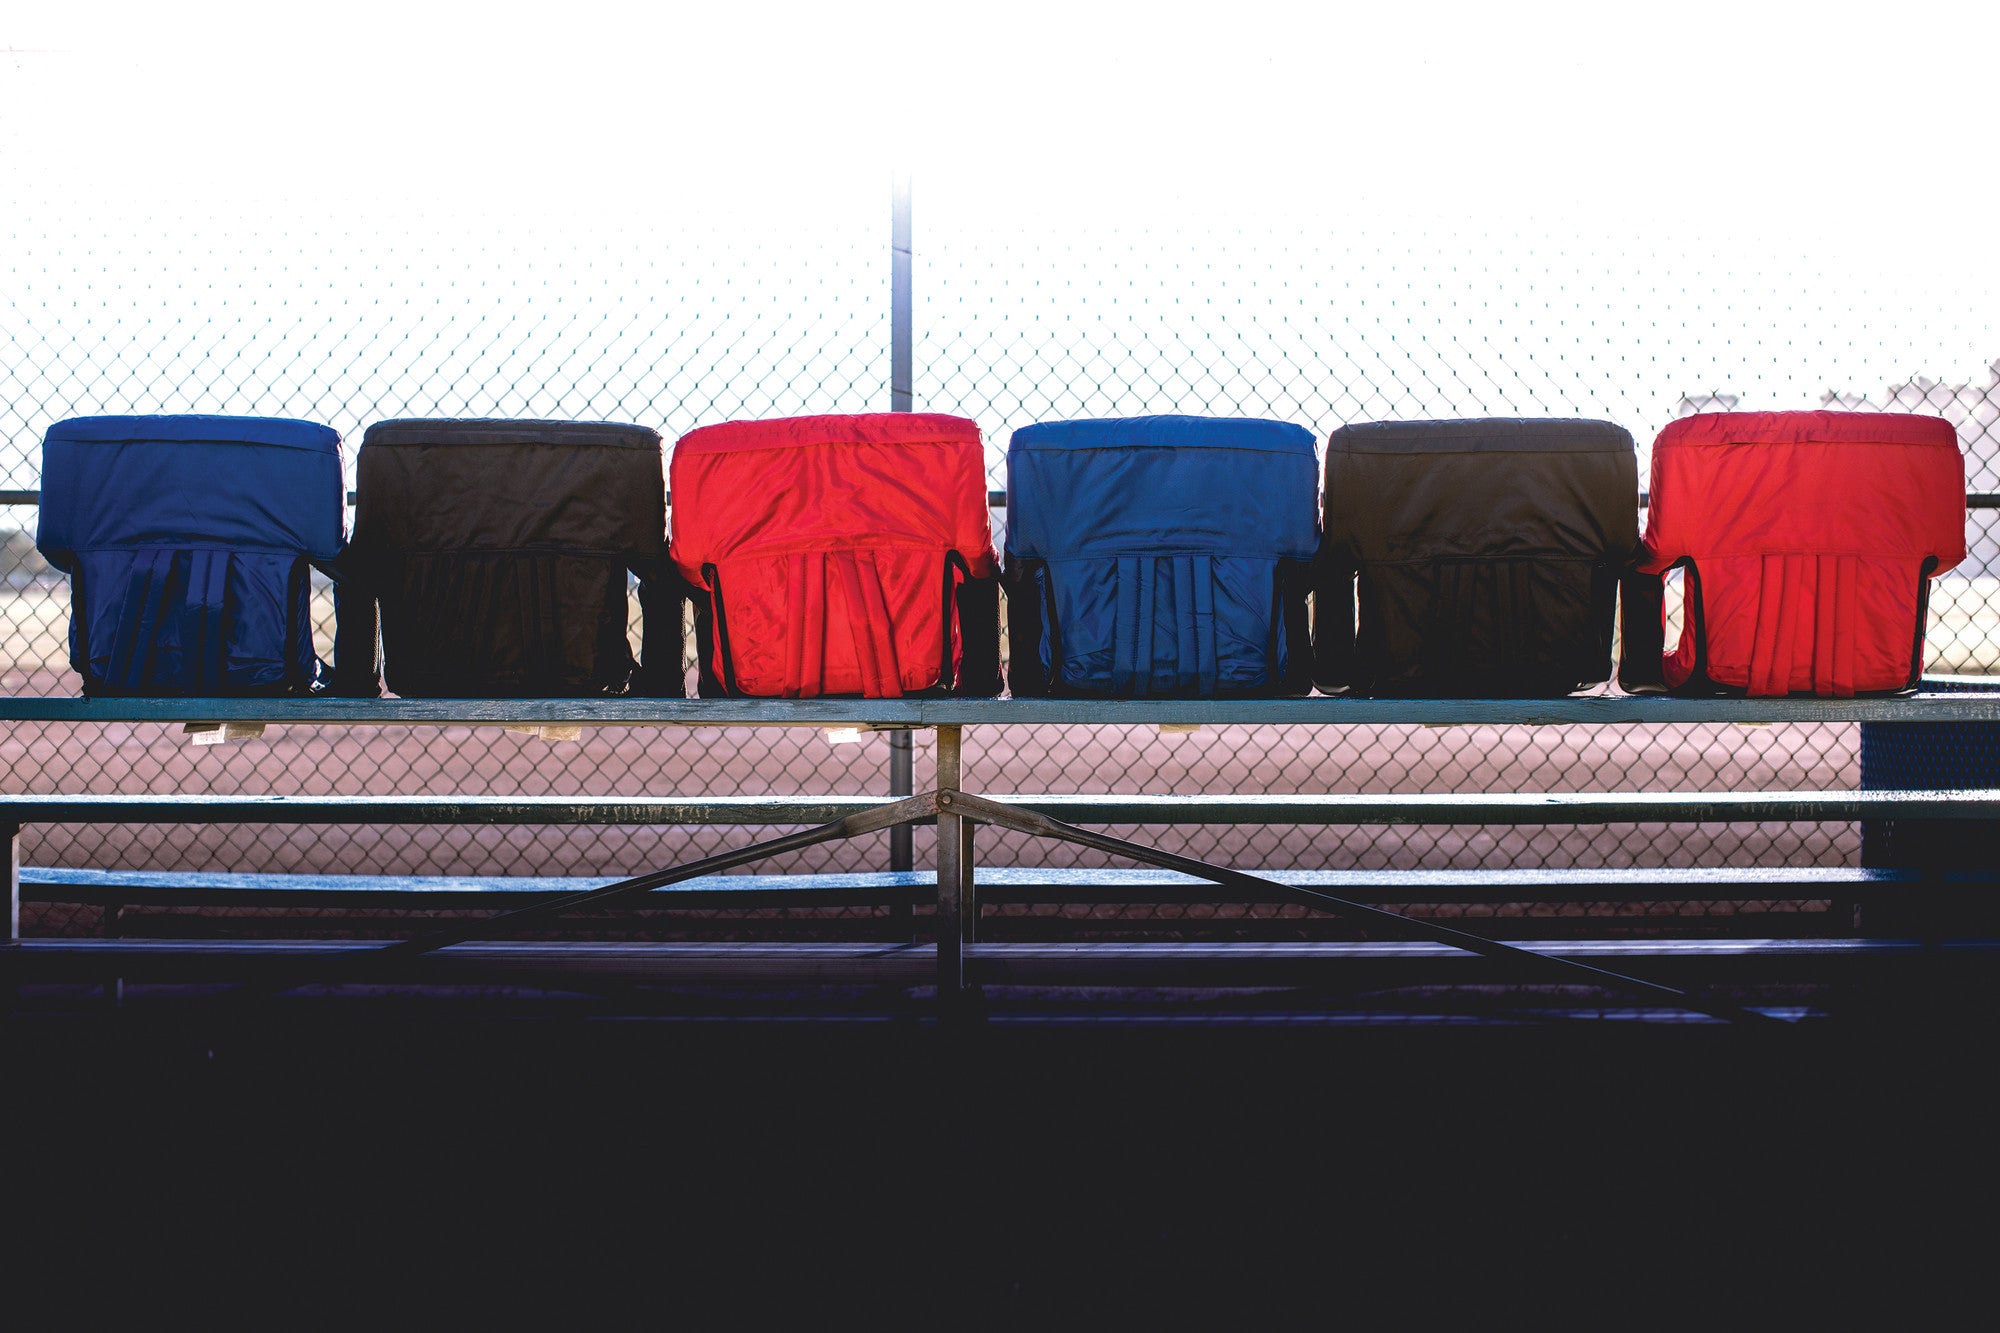 USC Trojans - Ventura Portable Reclining Stadium Seat